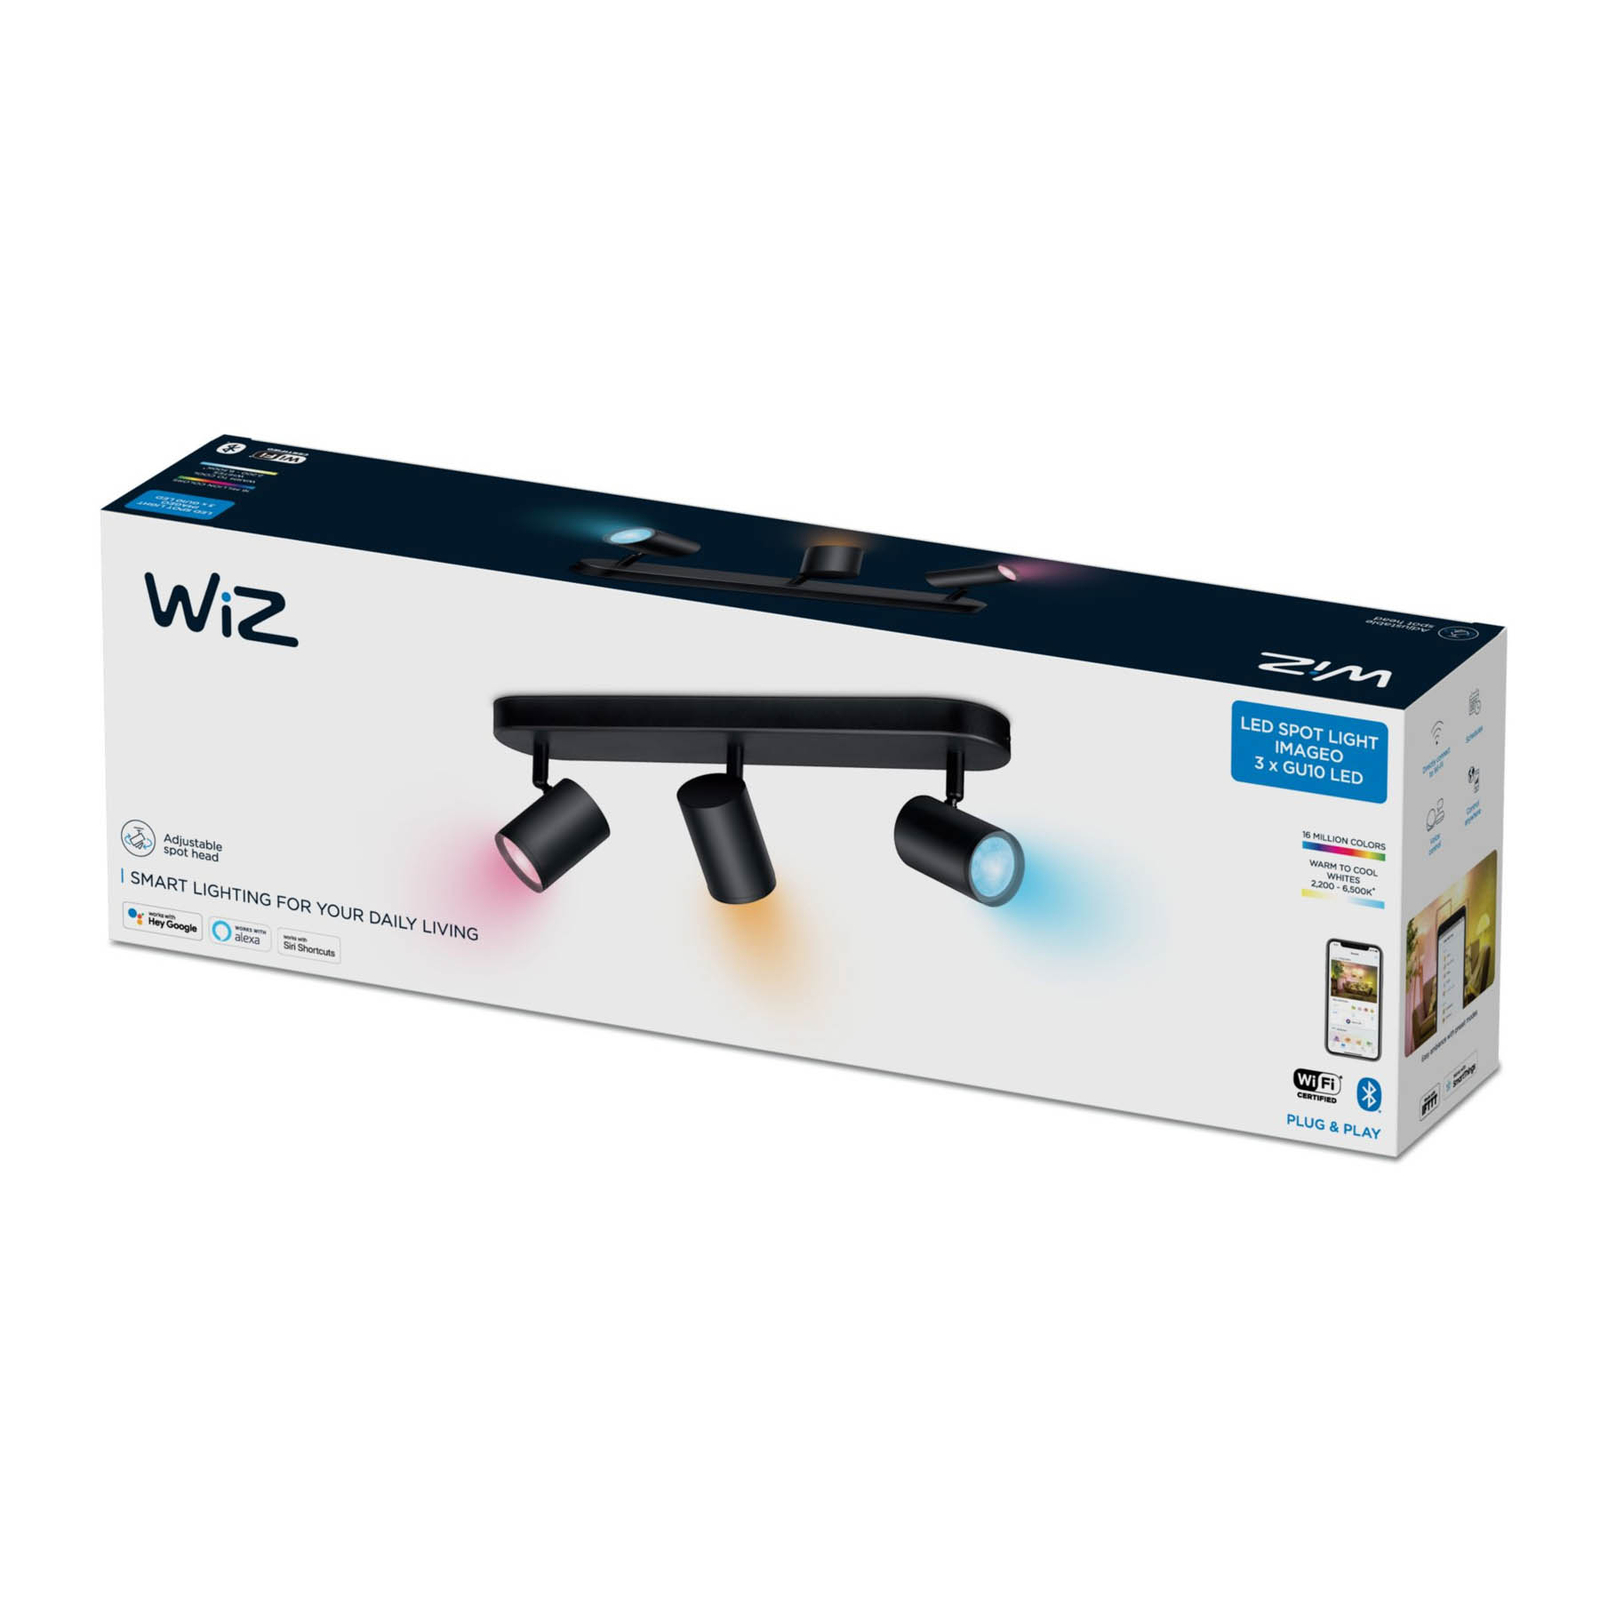 WiZ Imageo LED reflektor 3-svetelný RGB, čierny